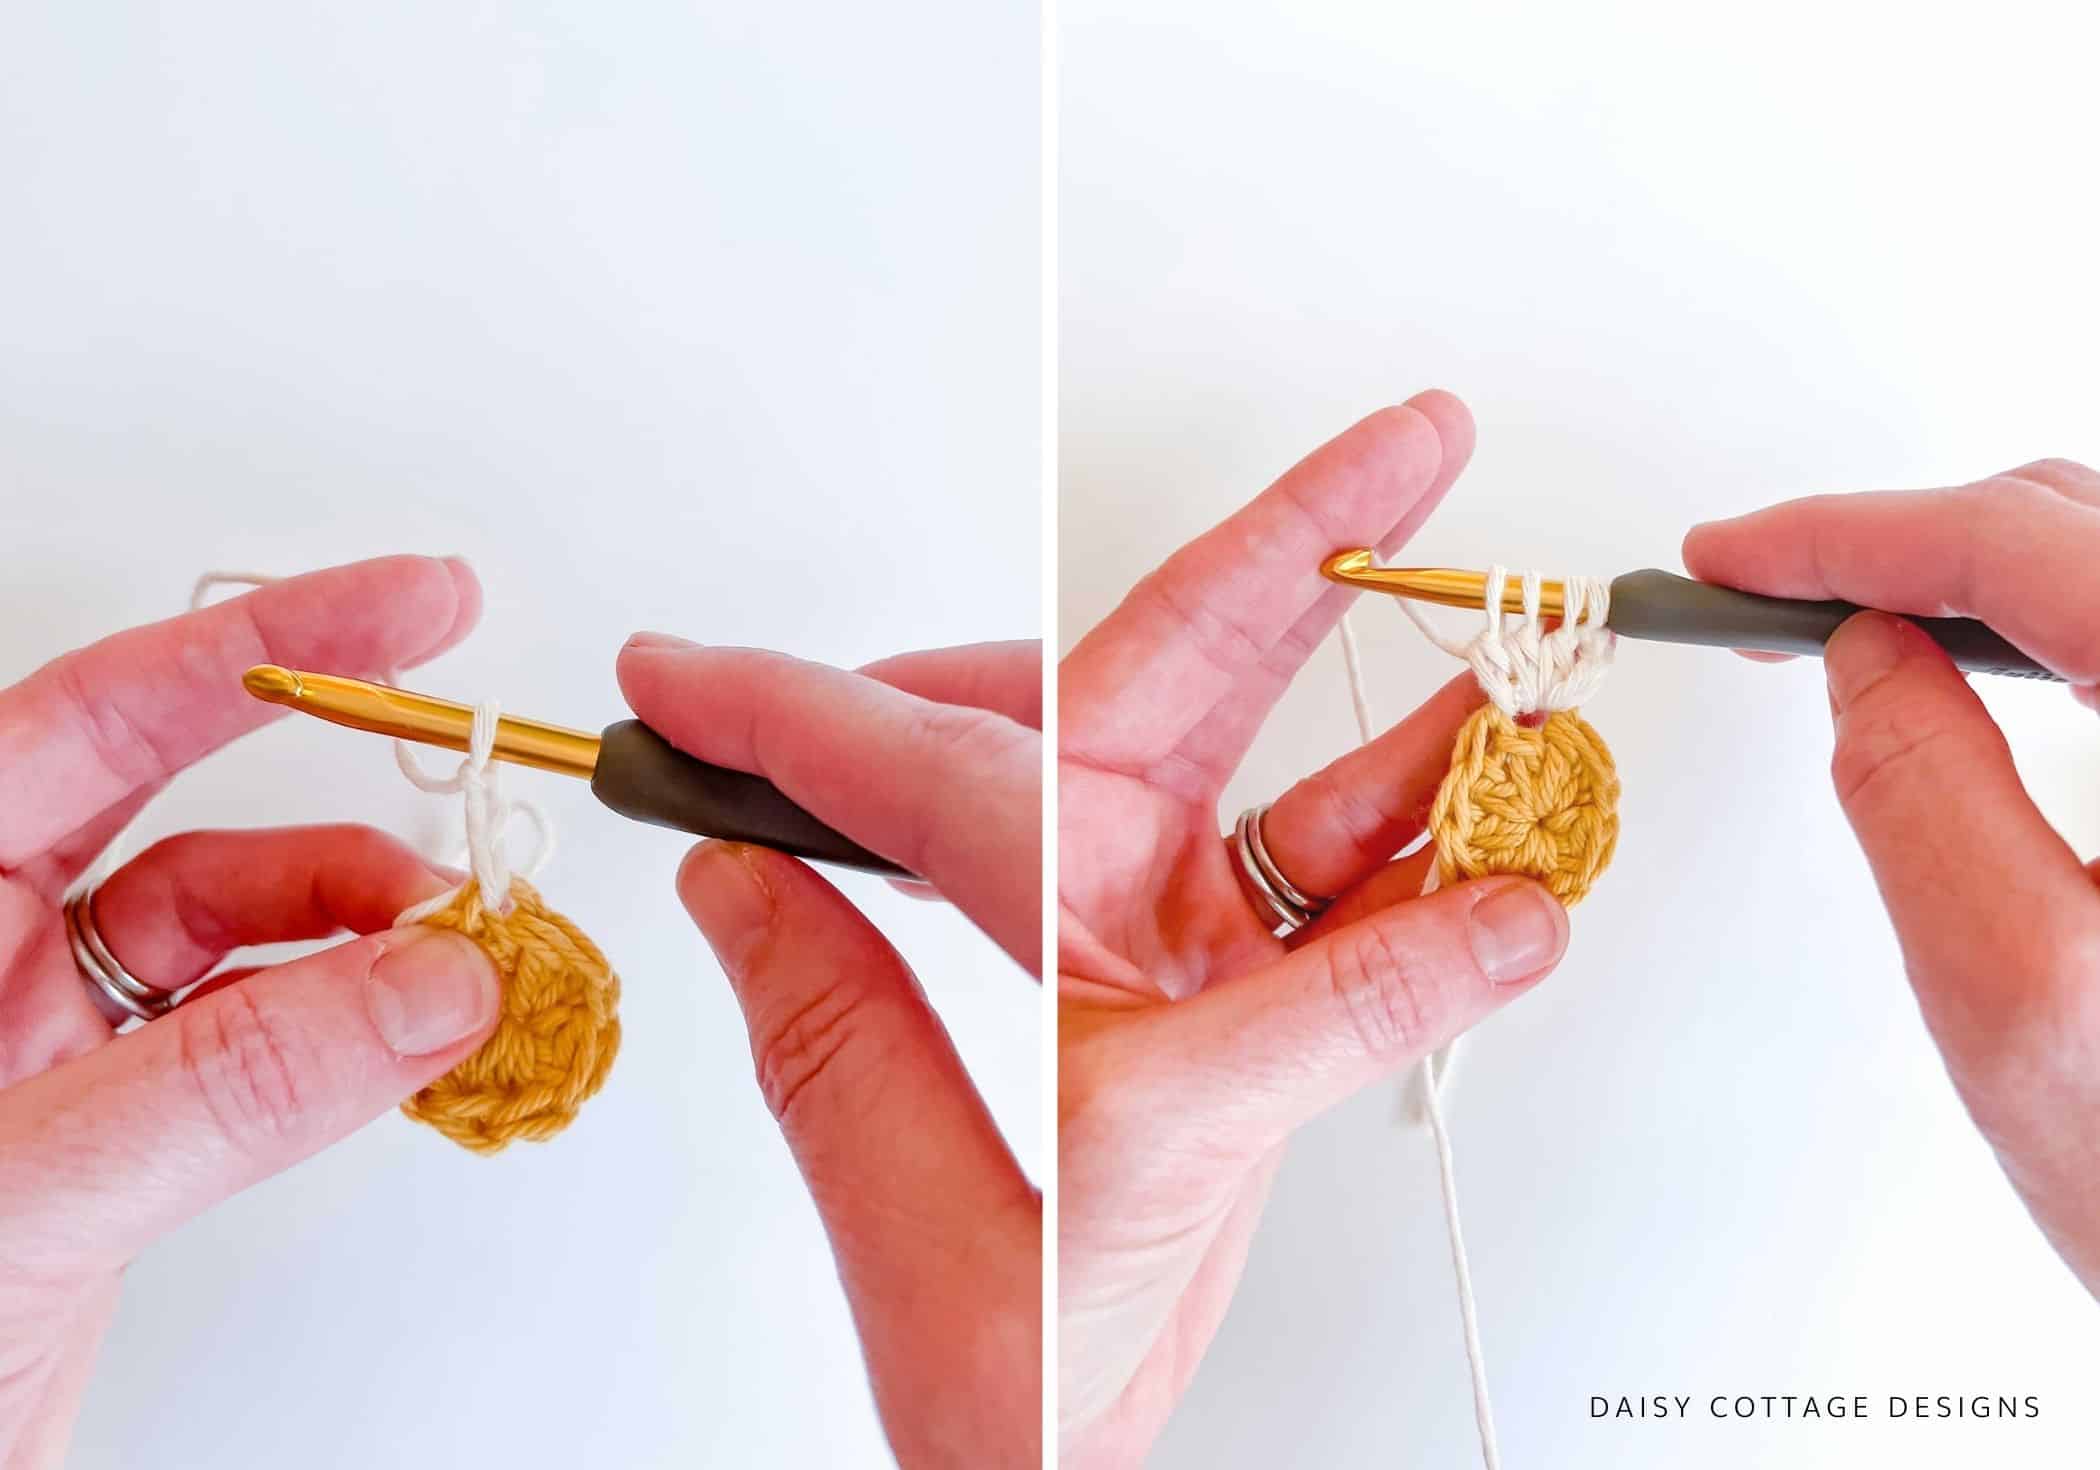 How to make petals of daisy granny square